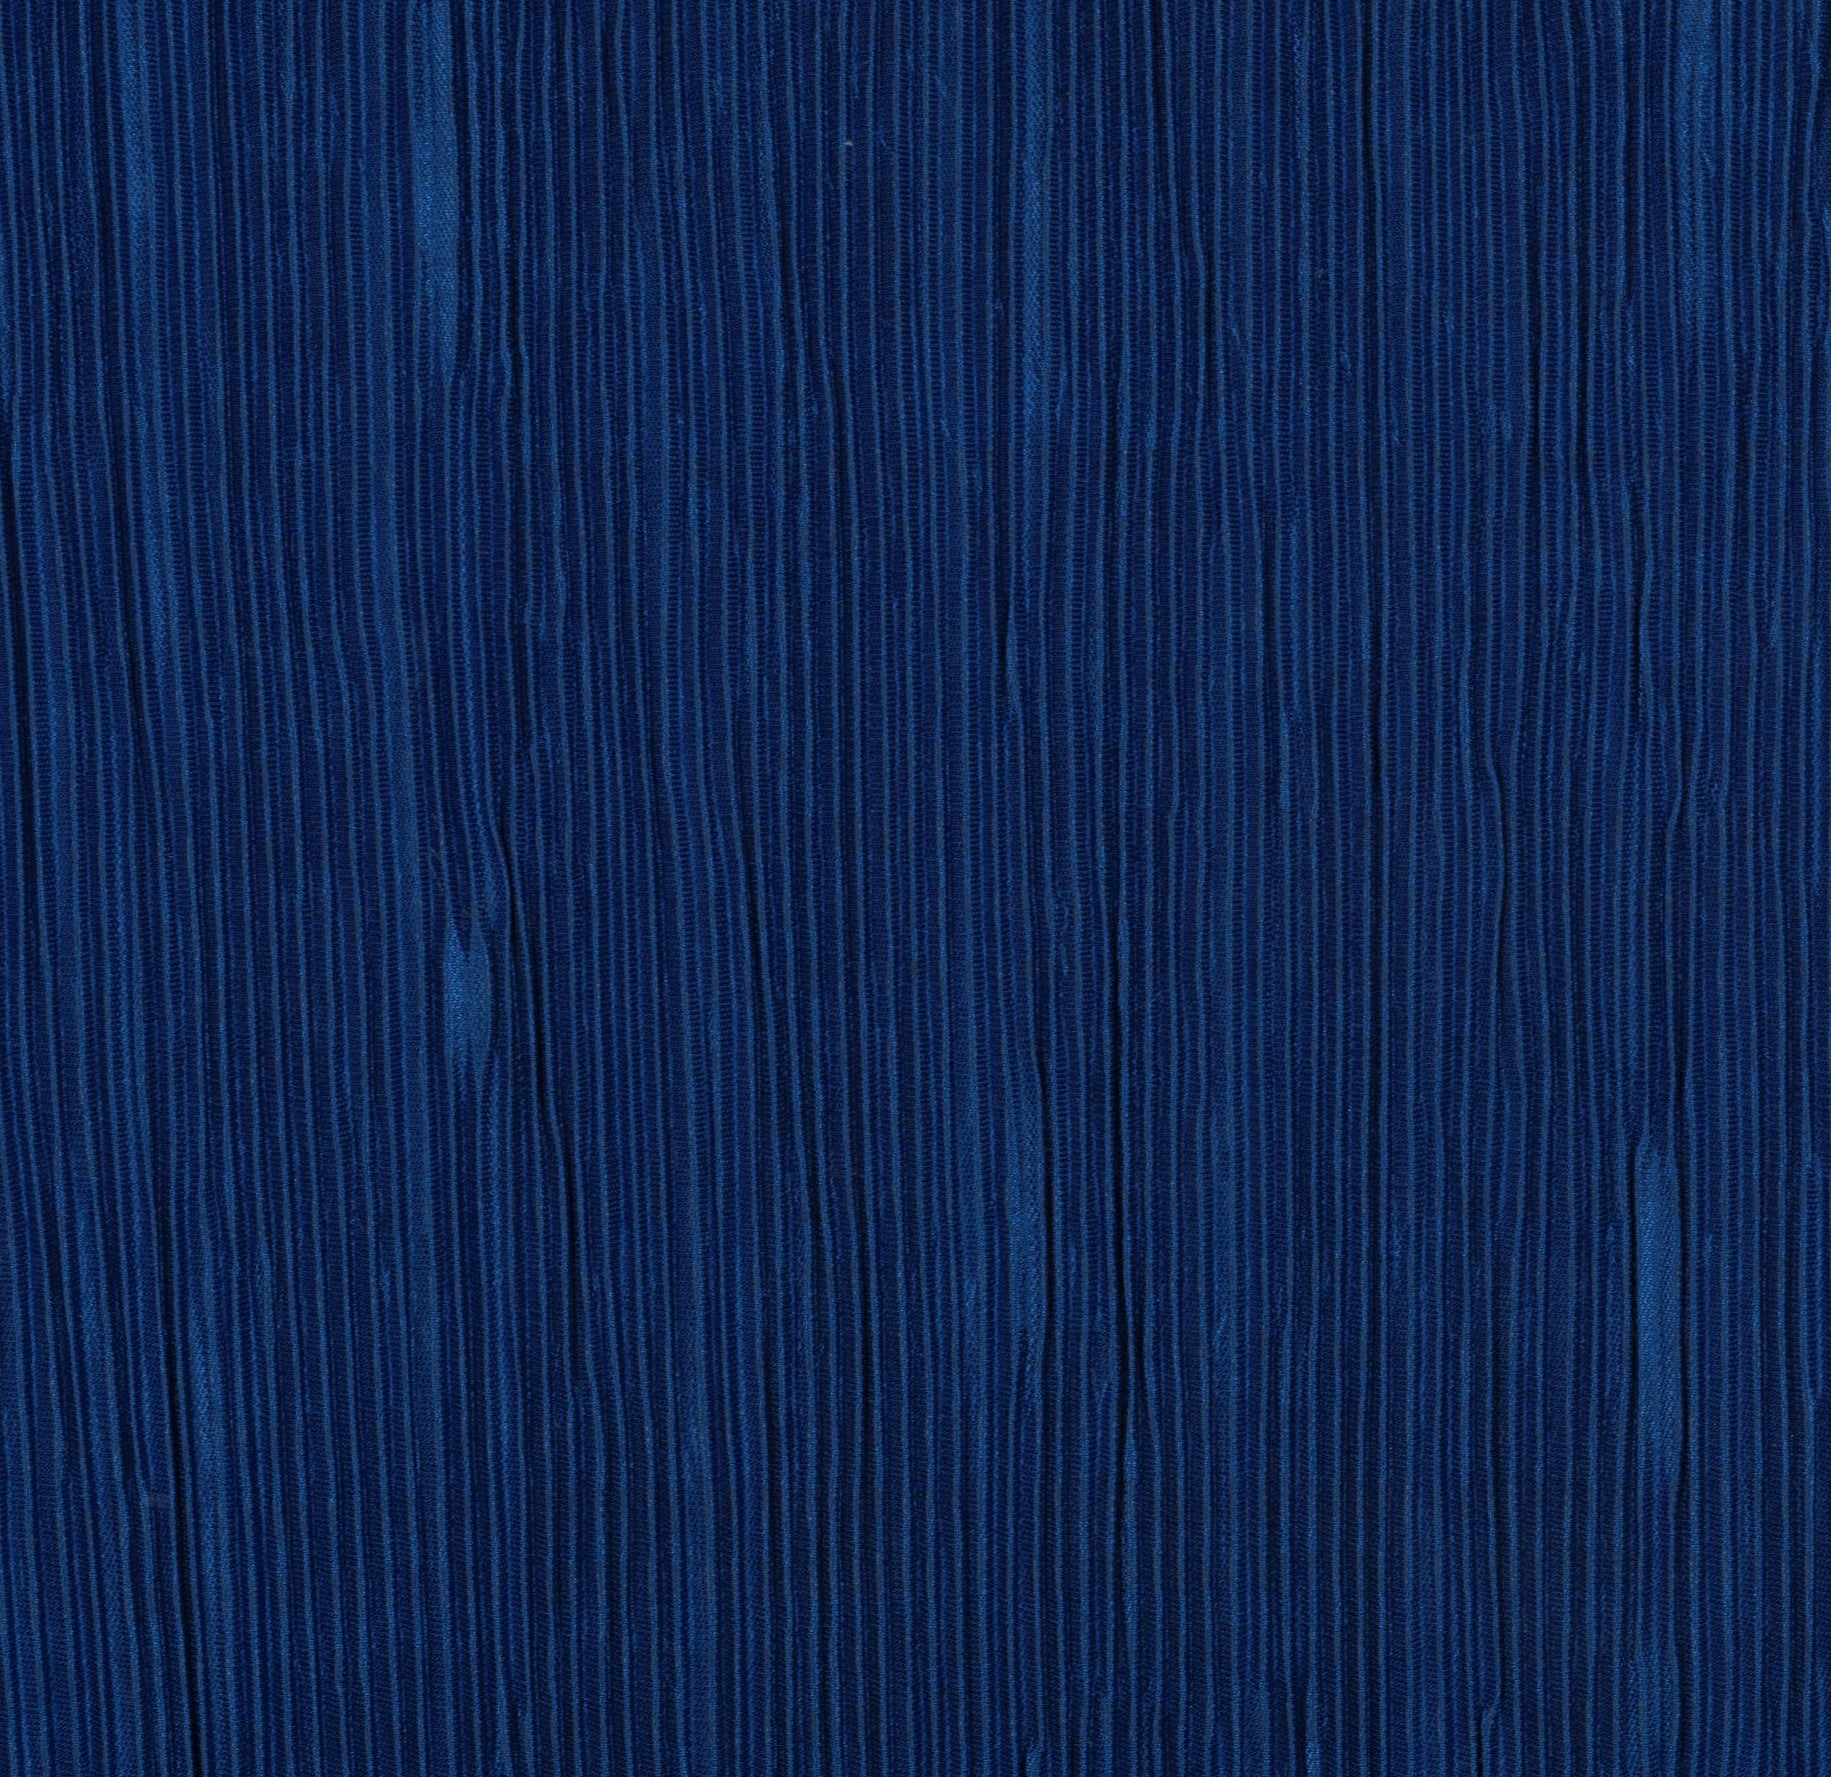 9761-03 Royal Blue Polyester Pleat Plain Dyed 100% 180g/yd 56" blue knit plain dyed pleat polyester Solid Color, Pleat - knit fabric - woven fabric - fabric company - fabric wholesale - fabric b2b - fabric factory - high quality fabric - hong kong fabric - fabric hk - acetate fabric - cotton fabric - linen fabric - metallic fabric - nylon fabric - polyester fabric - spandex fabric - chun wing hing - cwh hk - fabric worldwide ship - 針織布 - 梳織布 - 布料公司- 布料批發 - 香港布料 - 秦榮興